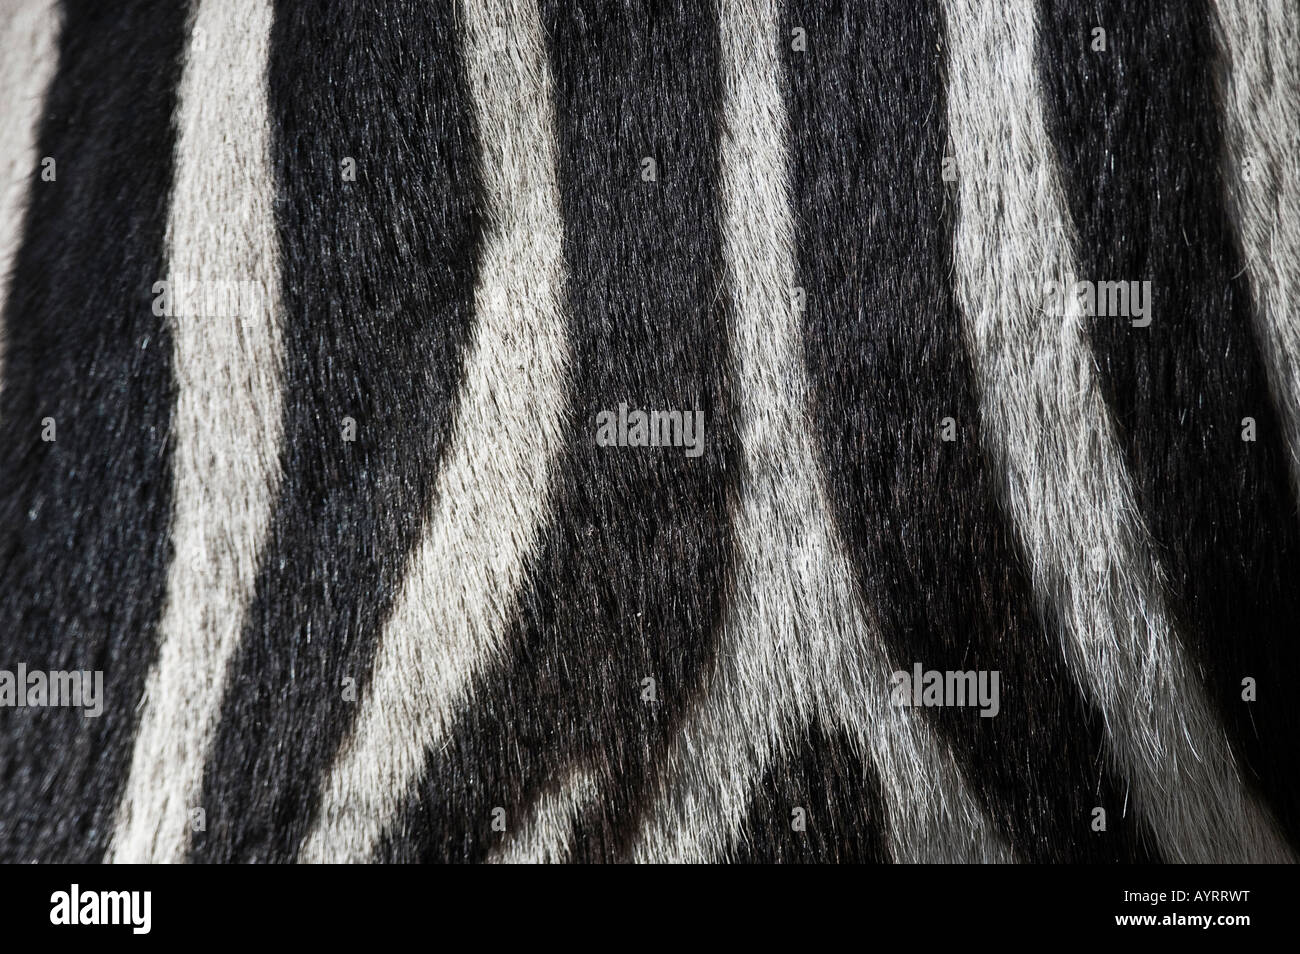 Fur detail, Zebra stripes (Equus quagga) Stock Photo